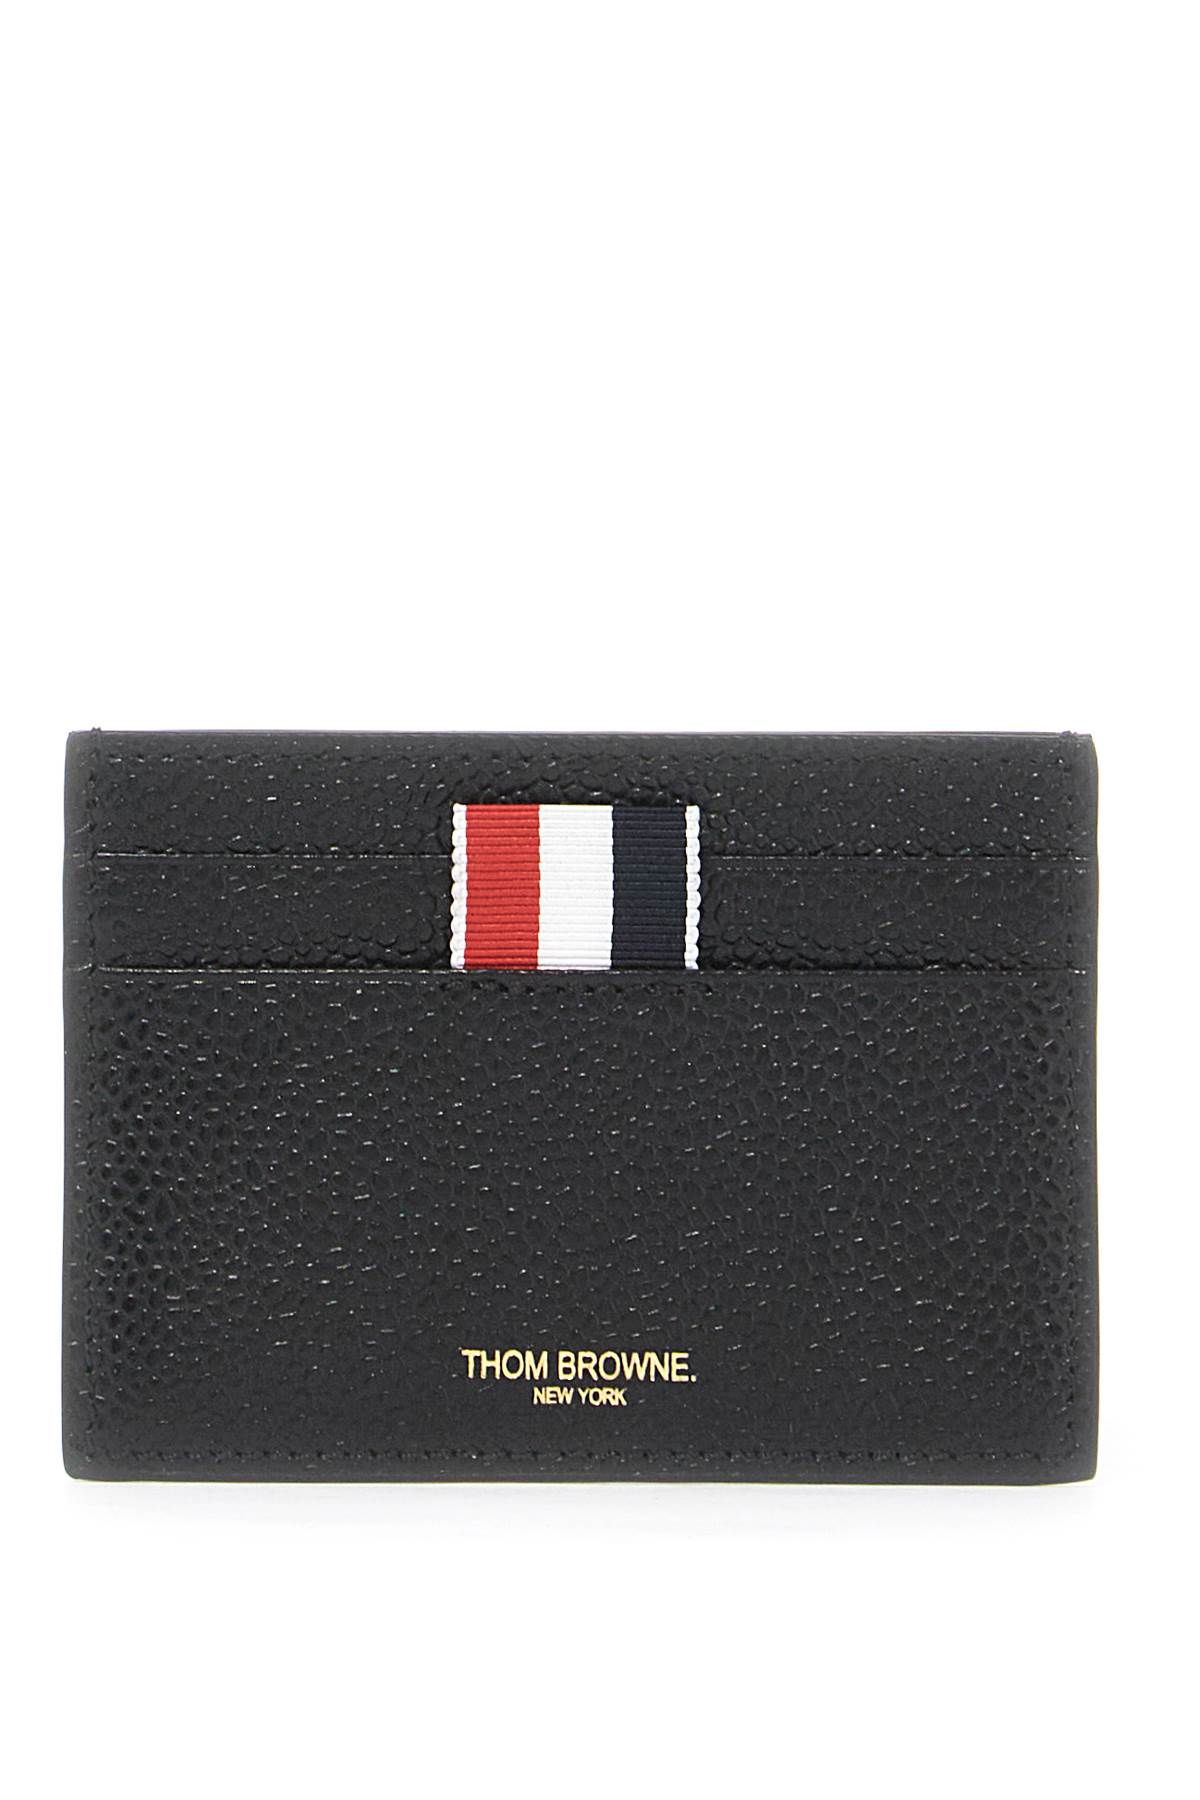 Thom Browne THOM BROWNE pebble grain leather card holder